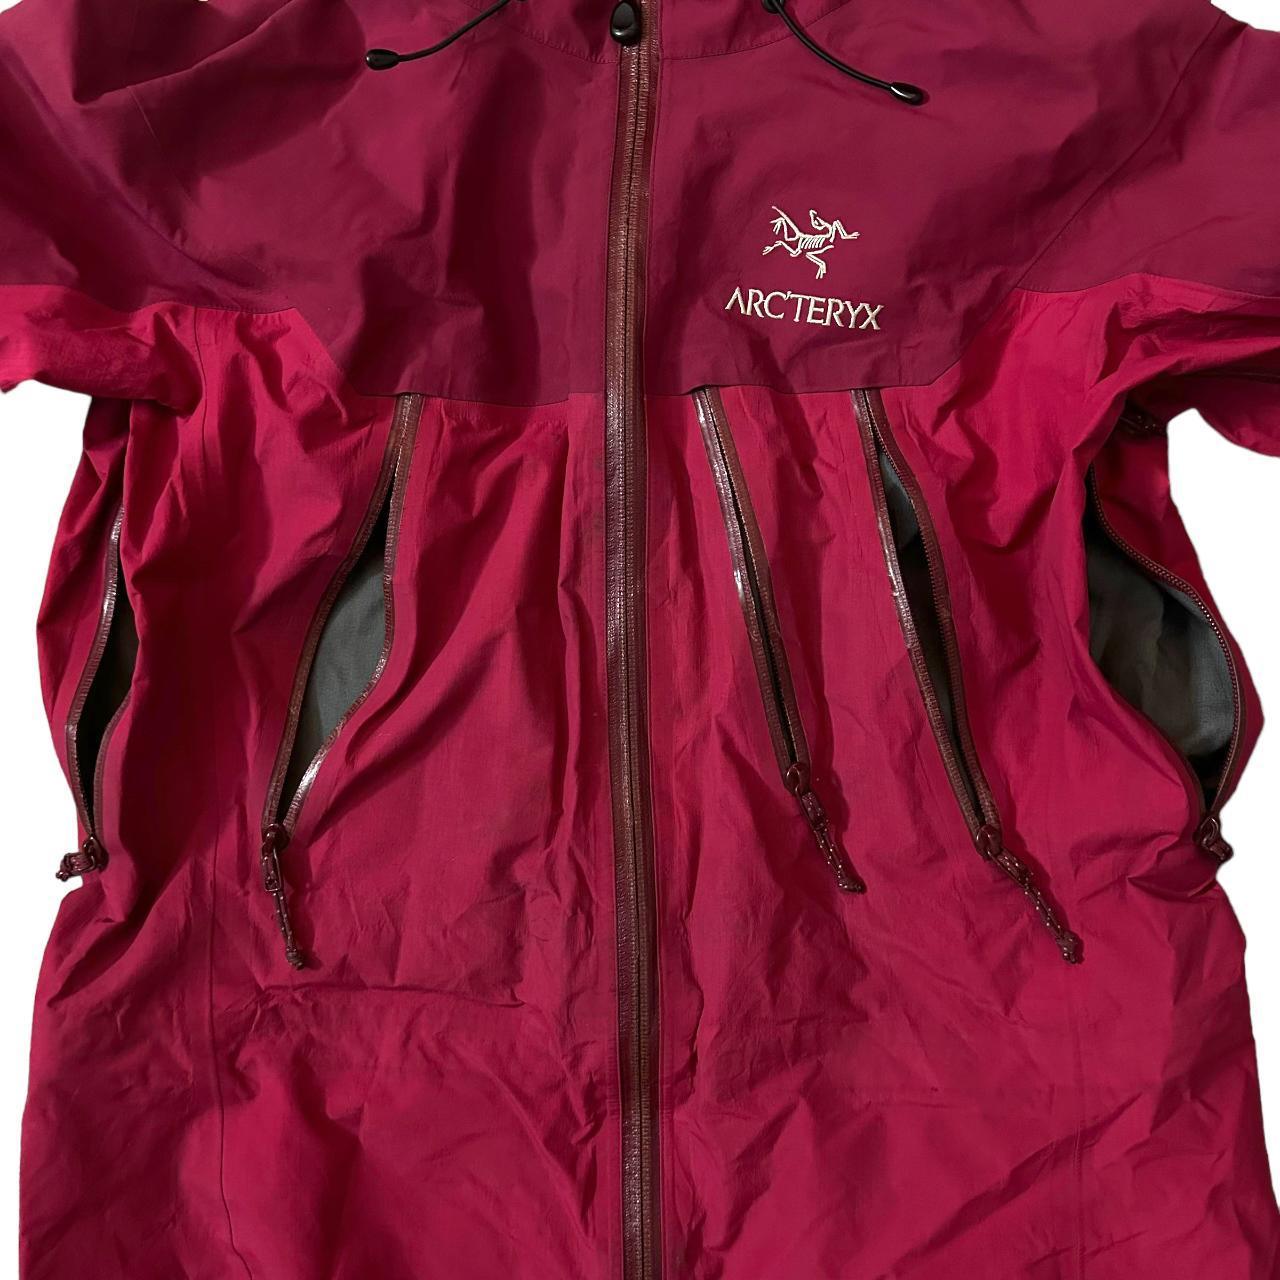 Arc'teryx Burgundy pink Goretex Jacket AR - Known Source